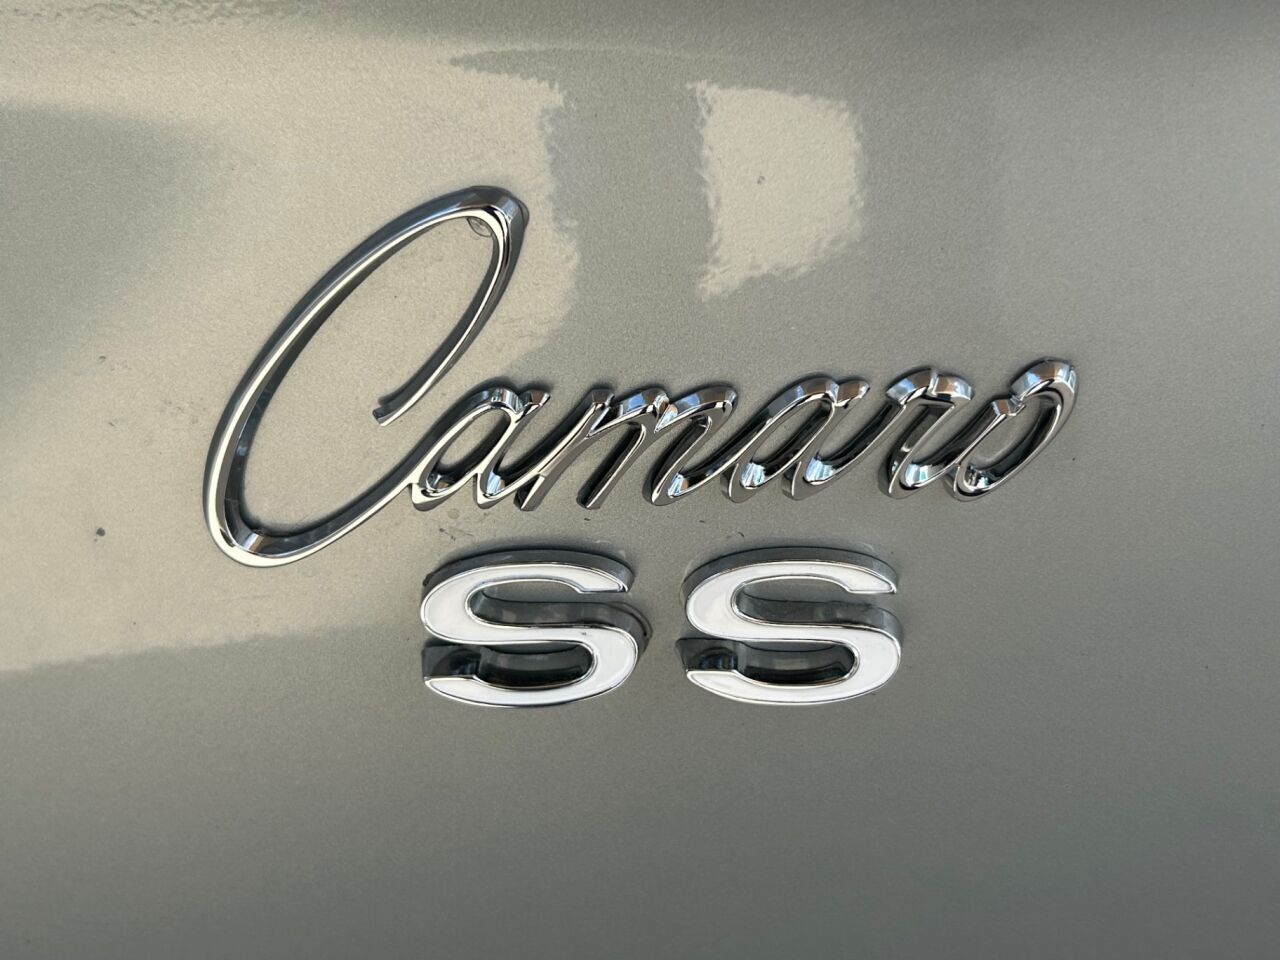 1969 Chevrolet Camaro 15